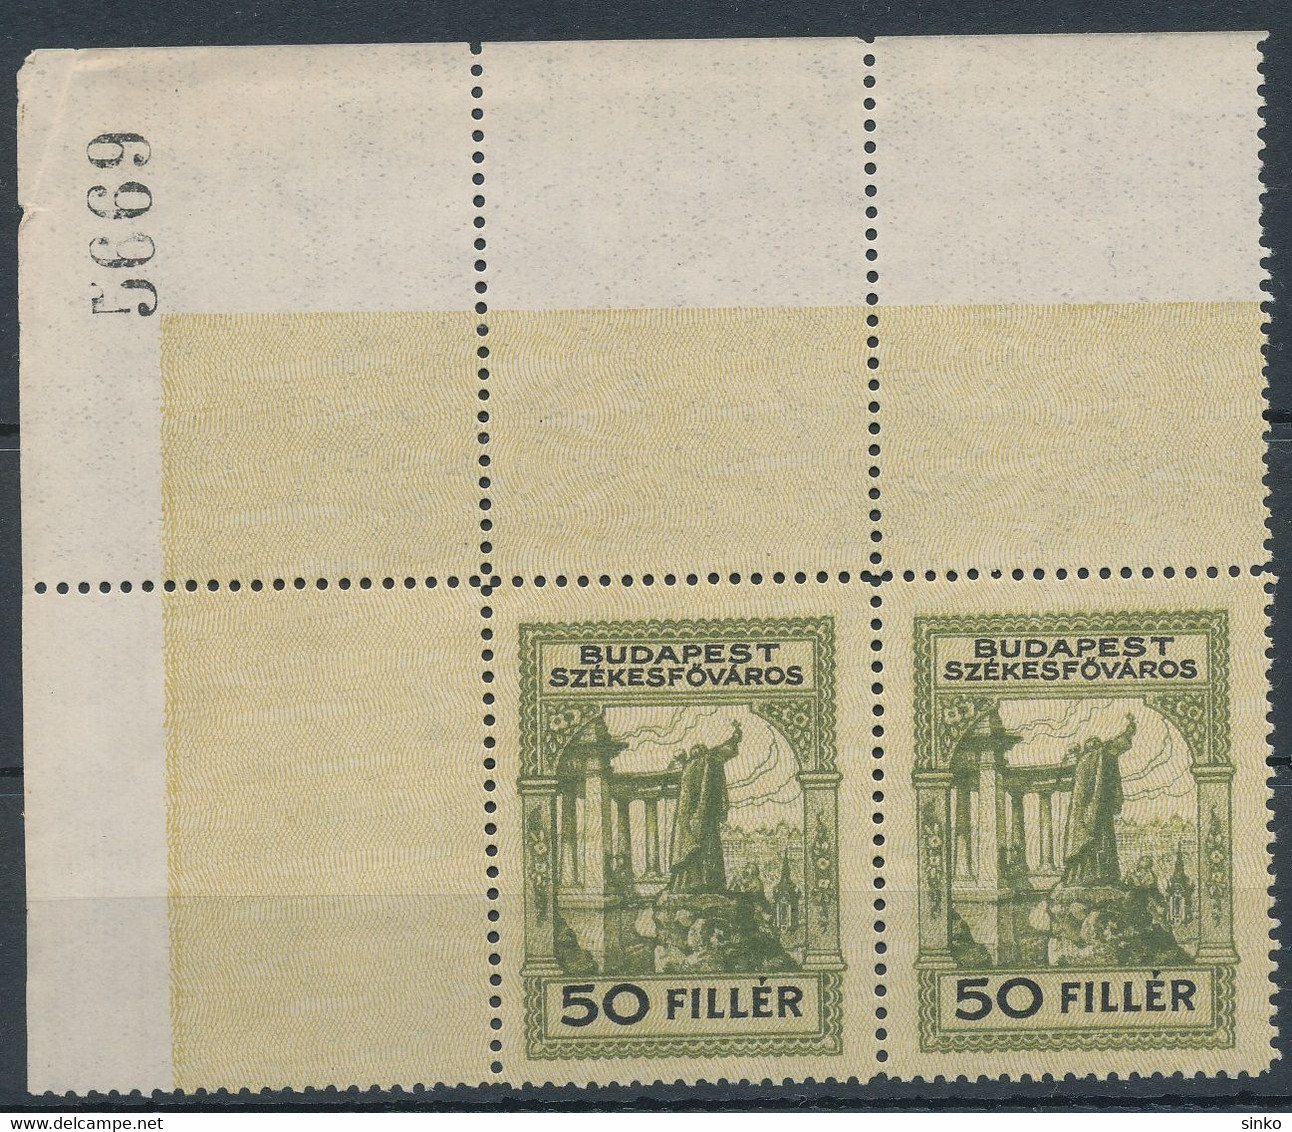 1927. Locally Issued Document Stamp - Foglietto Ricordo